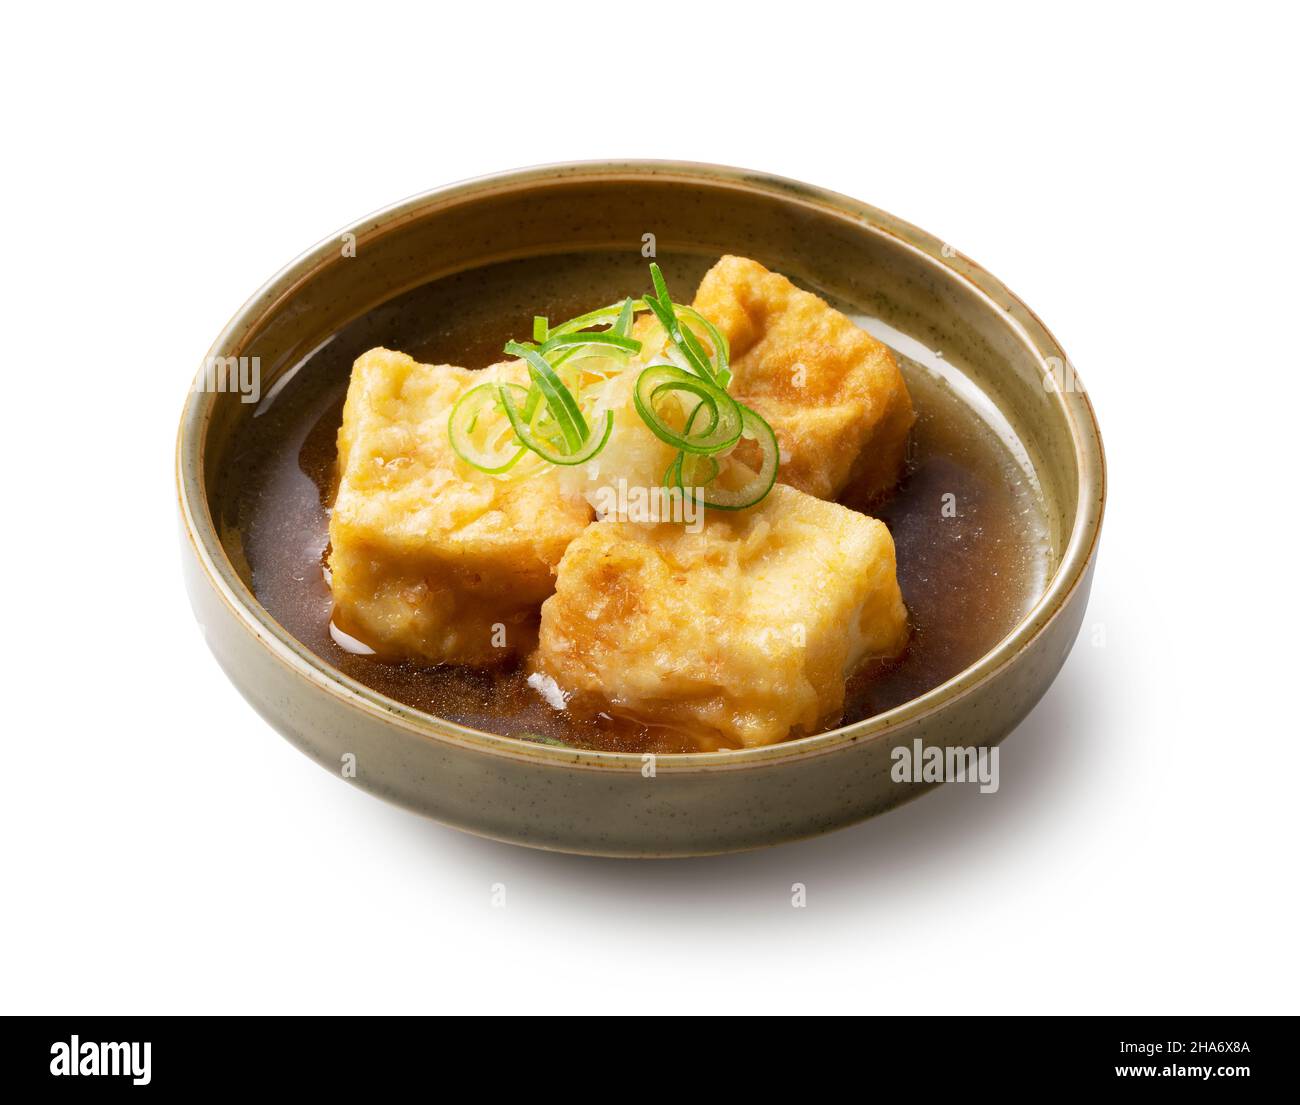 Japan gebratener tofu -Fotos und -Bildmaterial in hoher Auflösung – Alamy